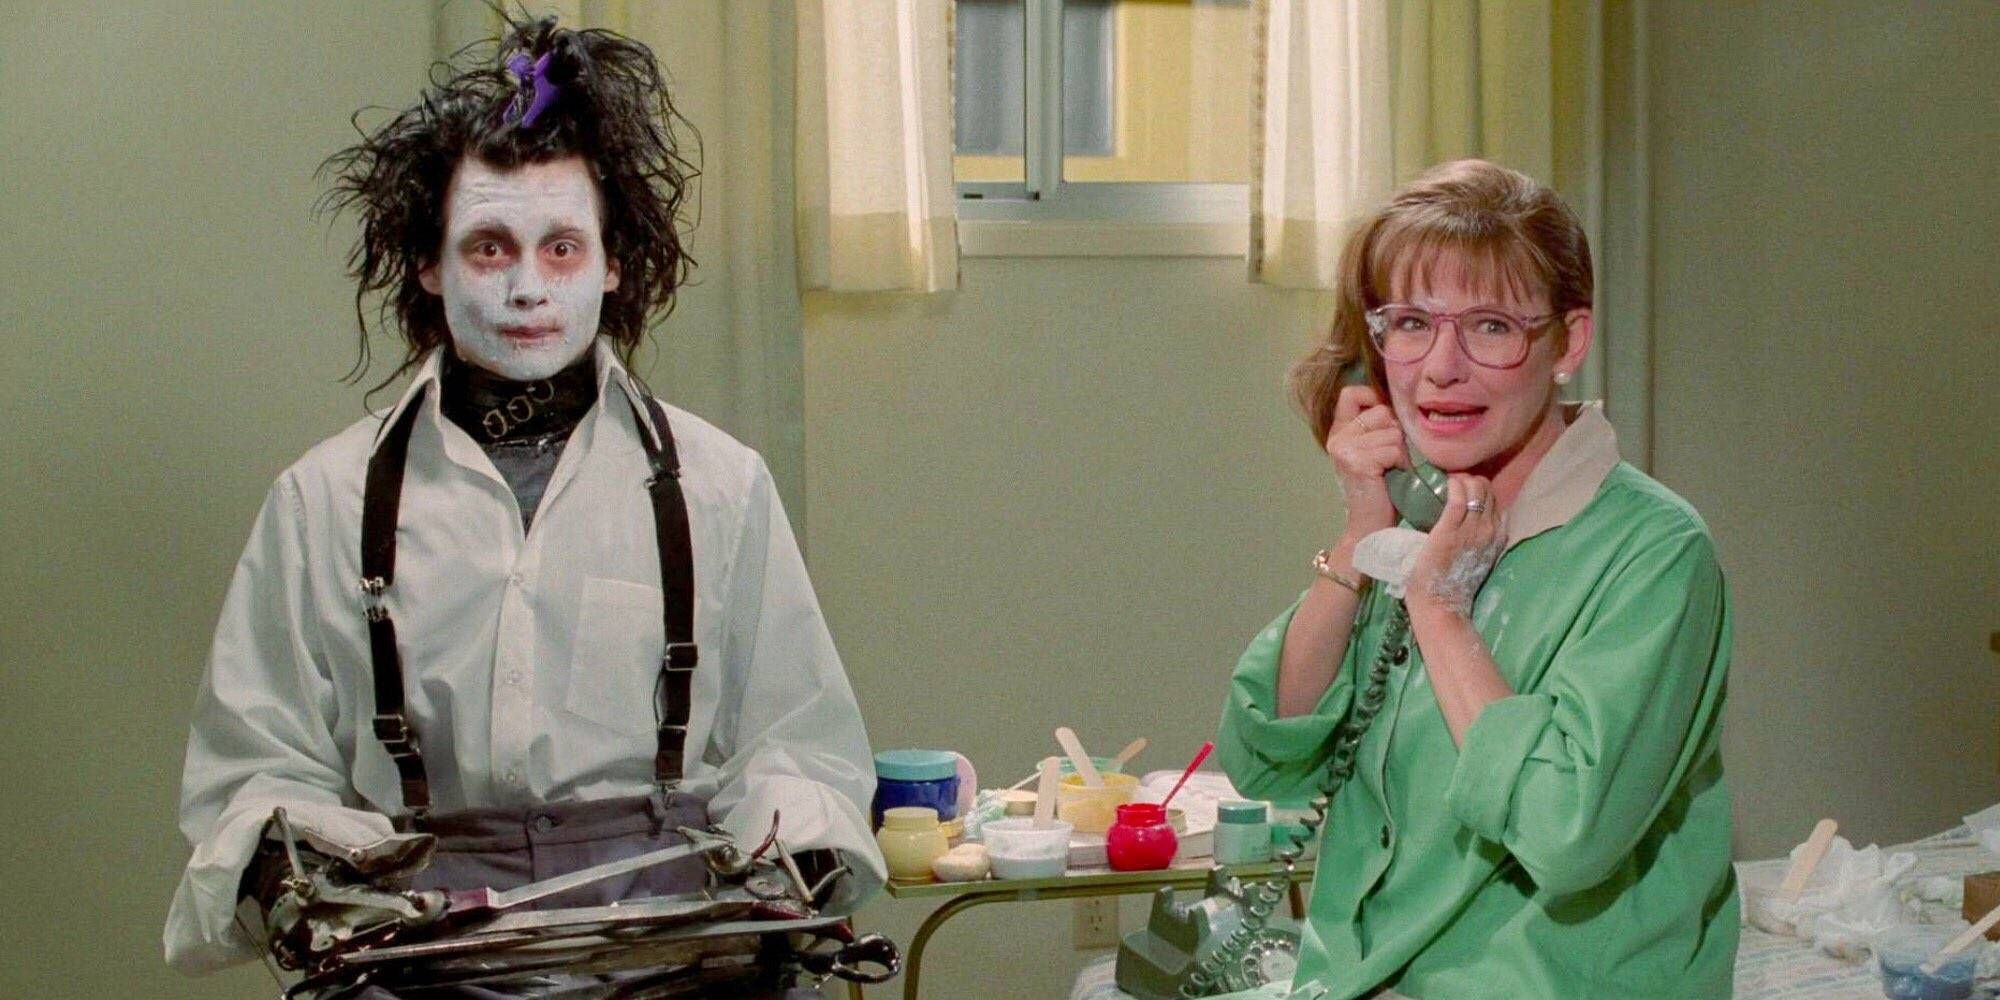 Johnny Depp as Edward Scissorhands sitting by Dianne Wiest as Peg's side as she answers a phone call in Edward Scissorhands.